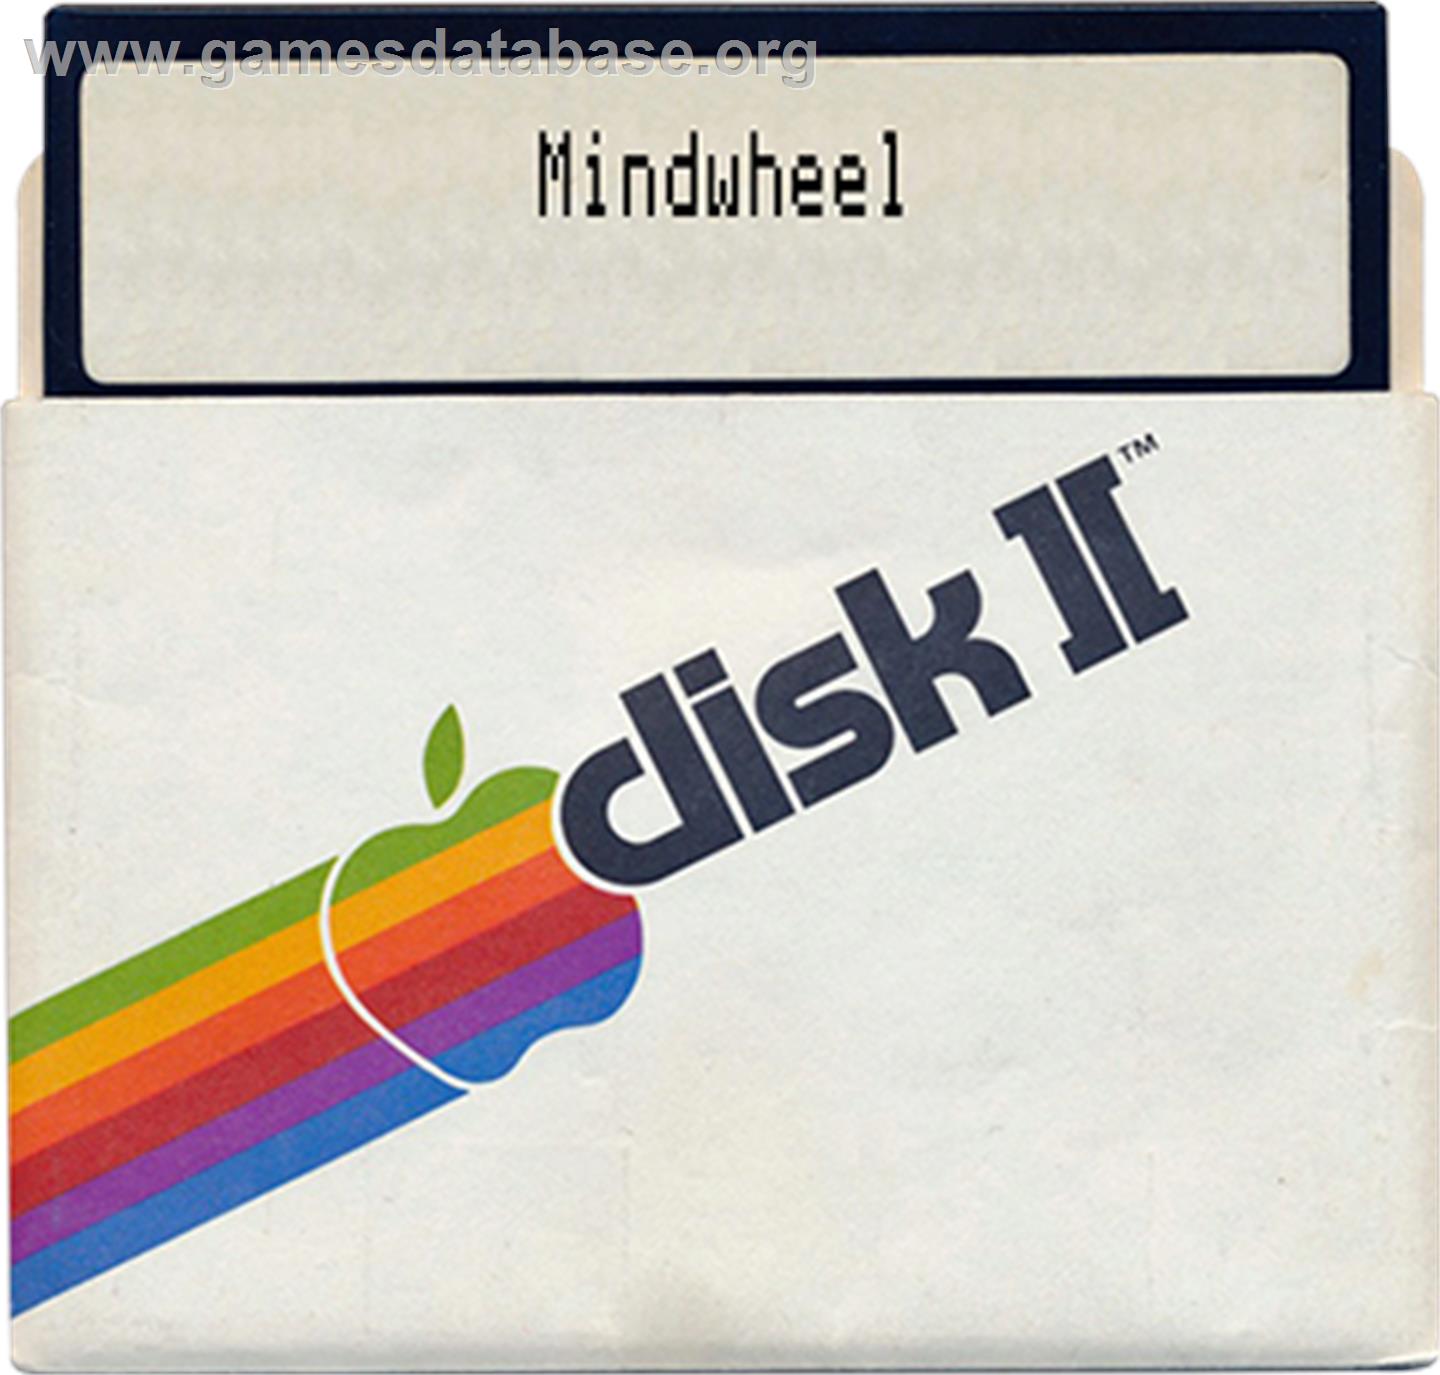 Mindwheel - Apple II - Artwork - Disc